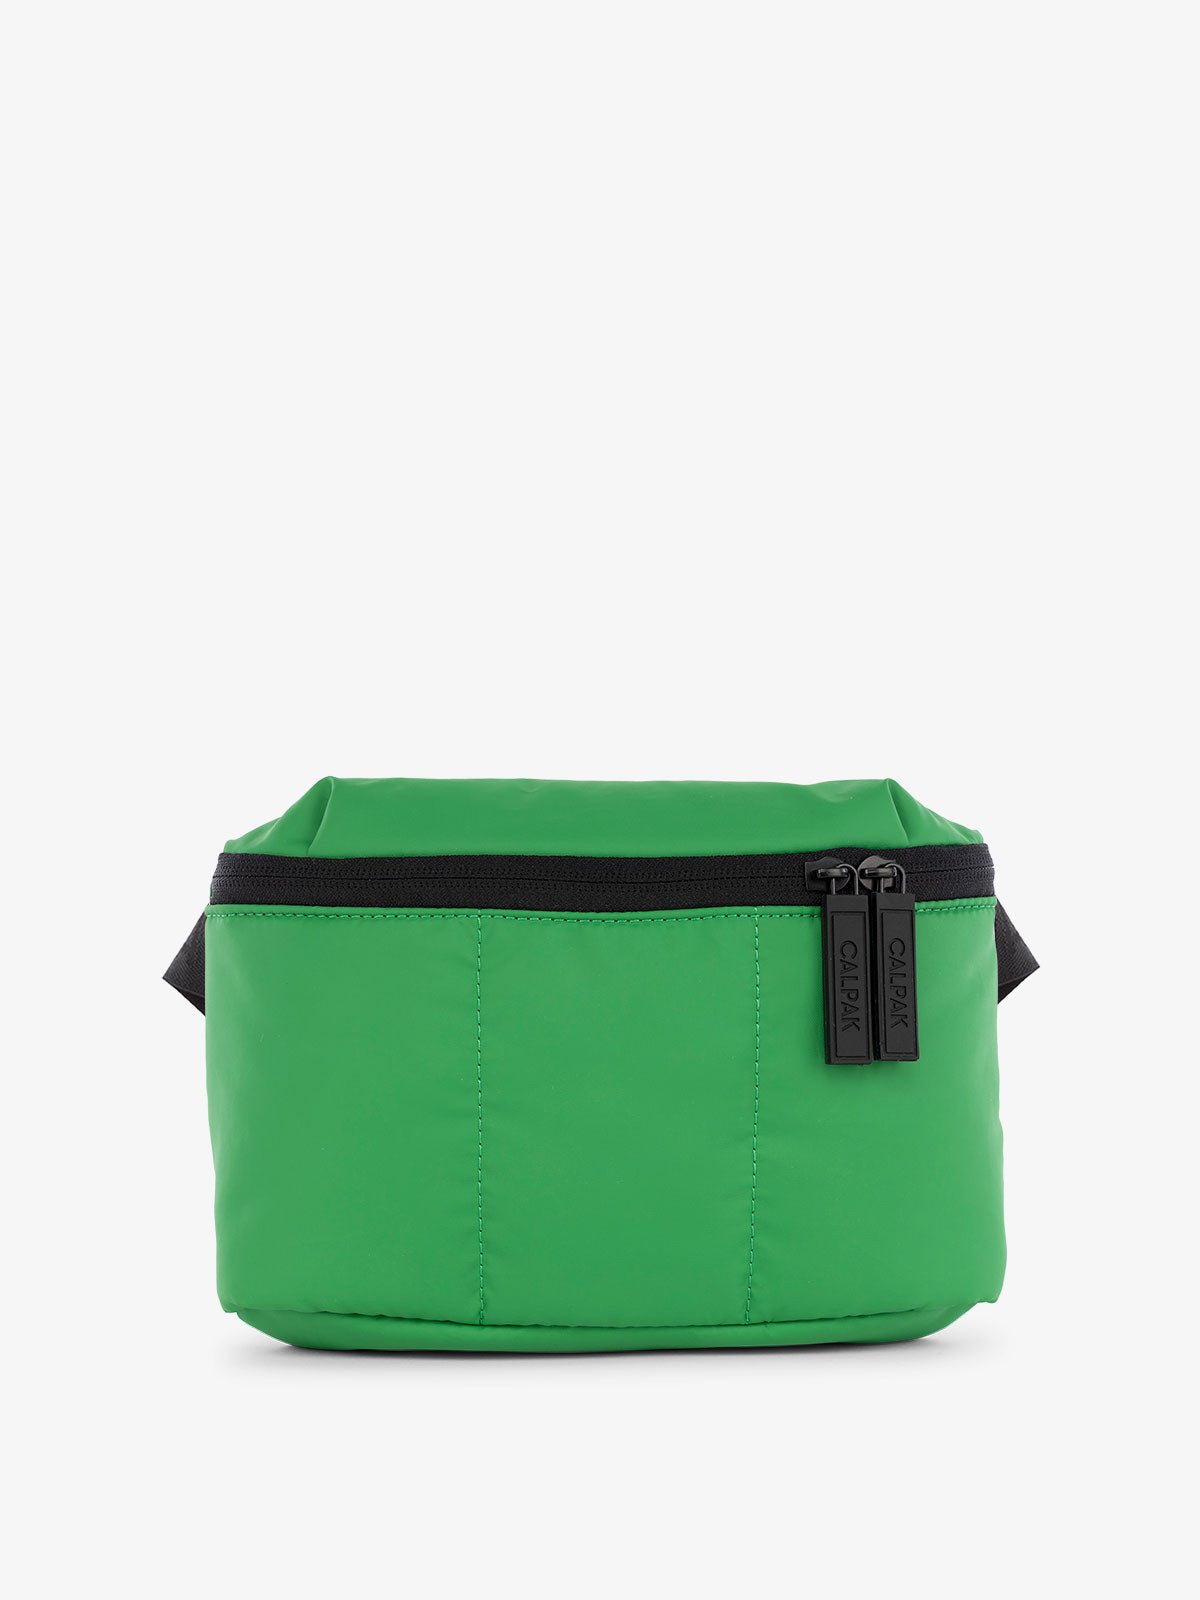 CALPAK Luka Mini Belt Bag with soft puffy exterior in green apple